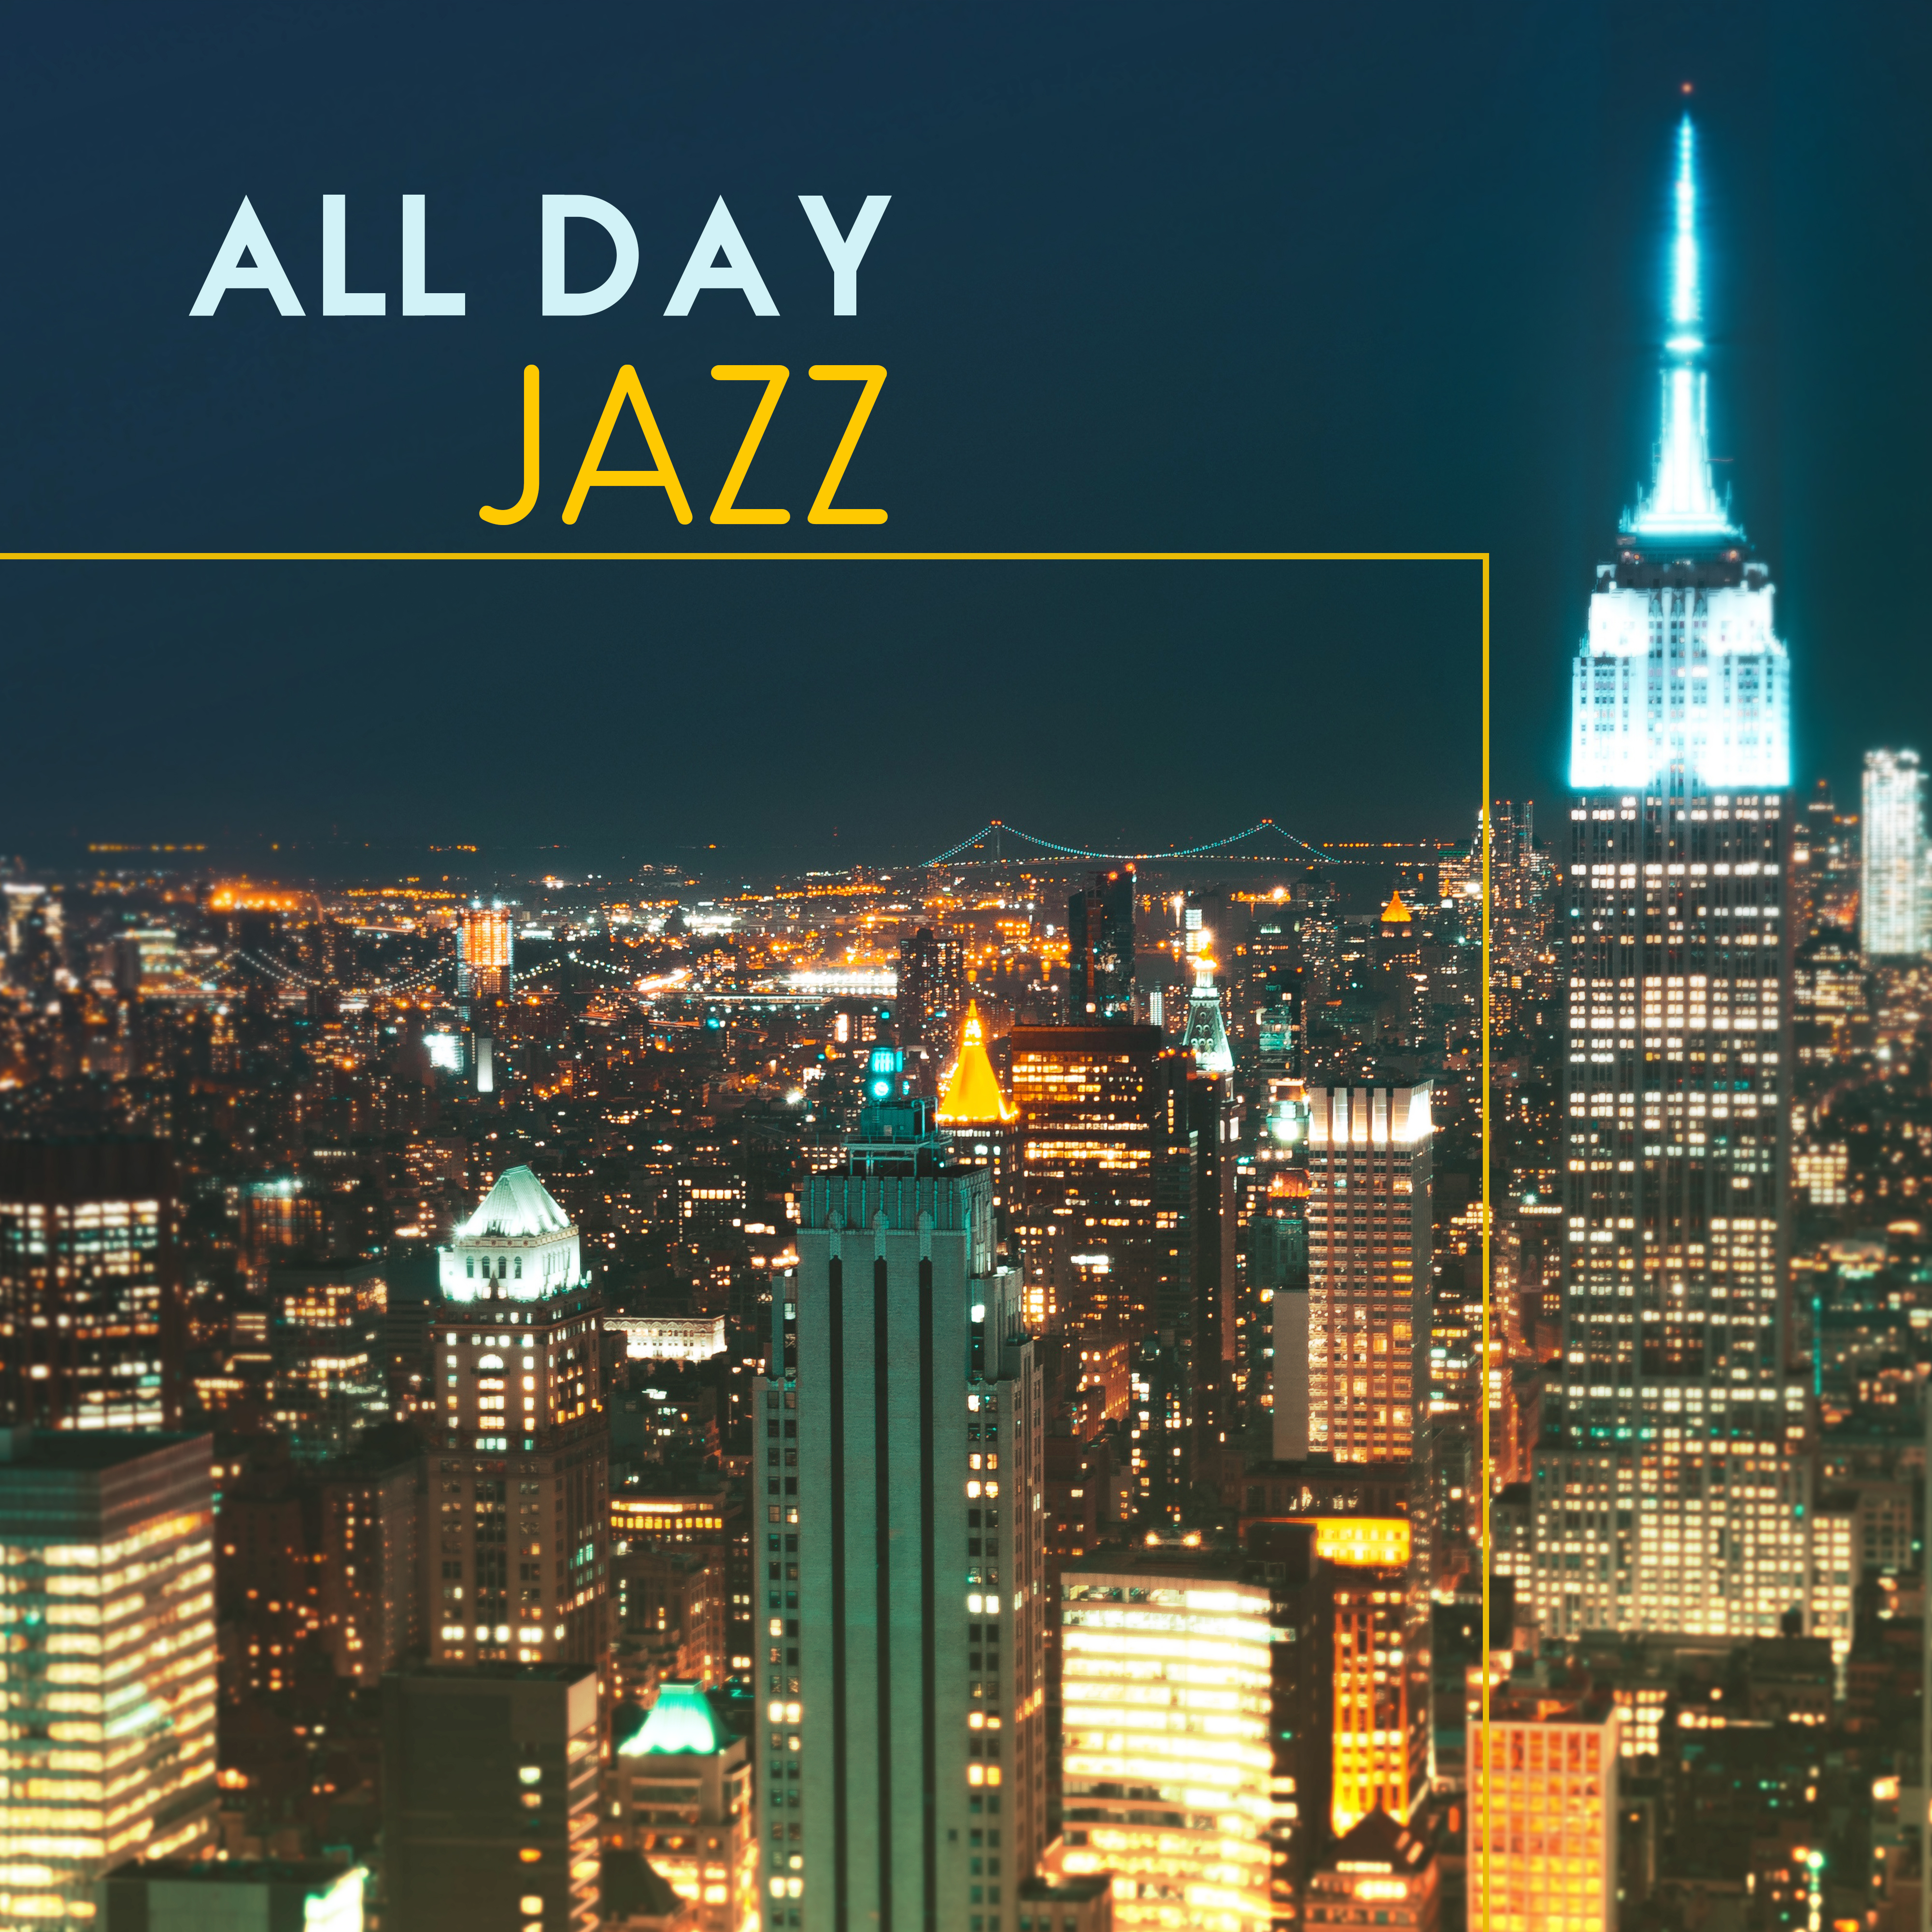 All Day Jazz – Instrumental Jazz Music, Jazz 2017, Relax & Chill with Smooth Jazz Vibrations